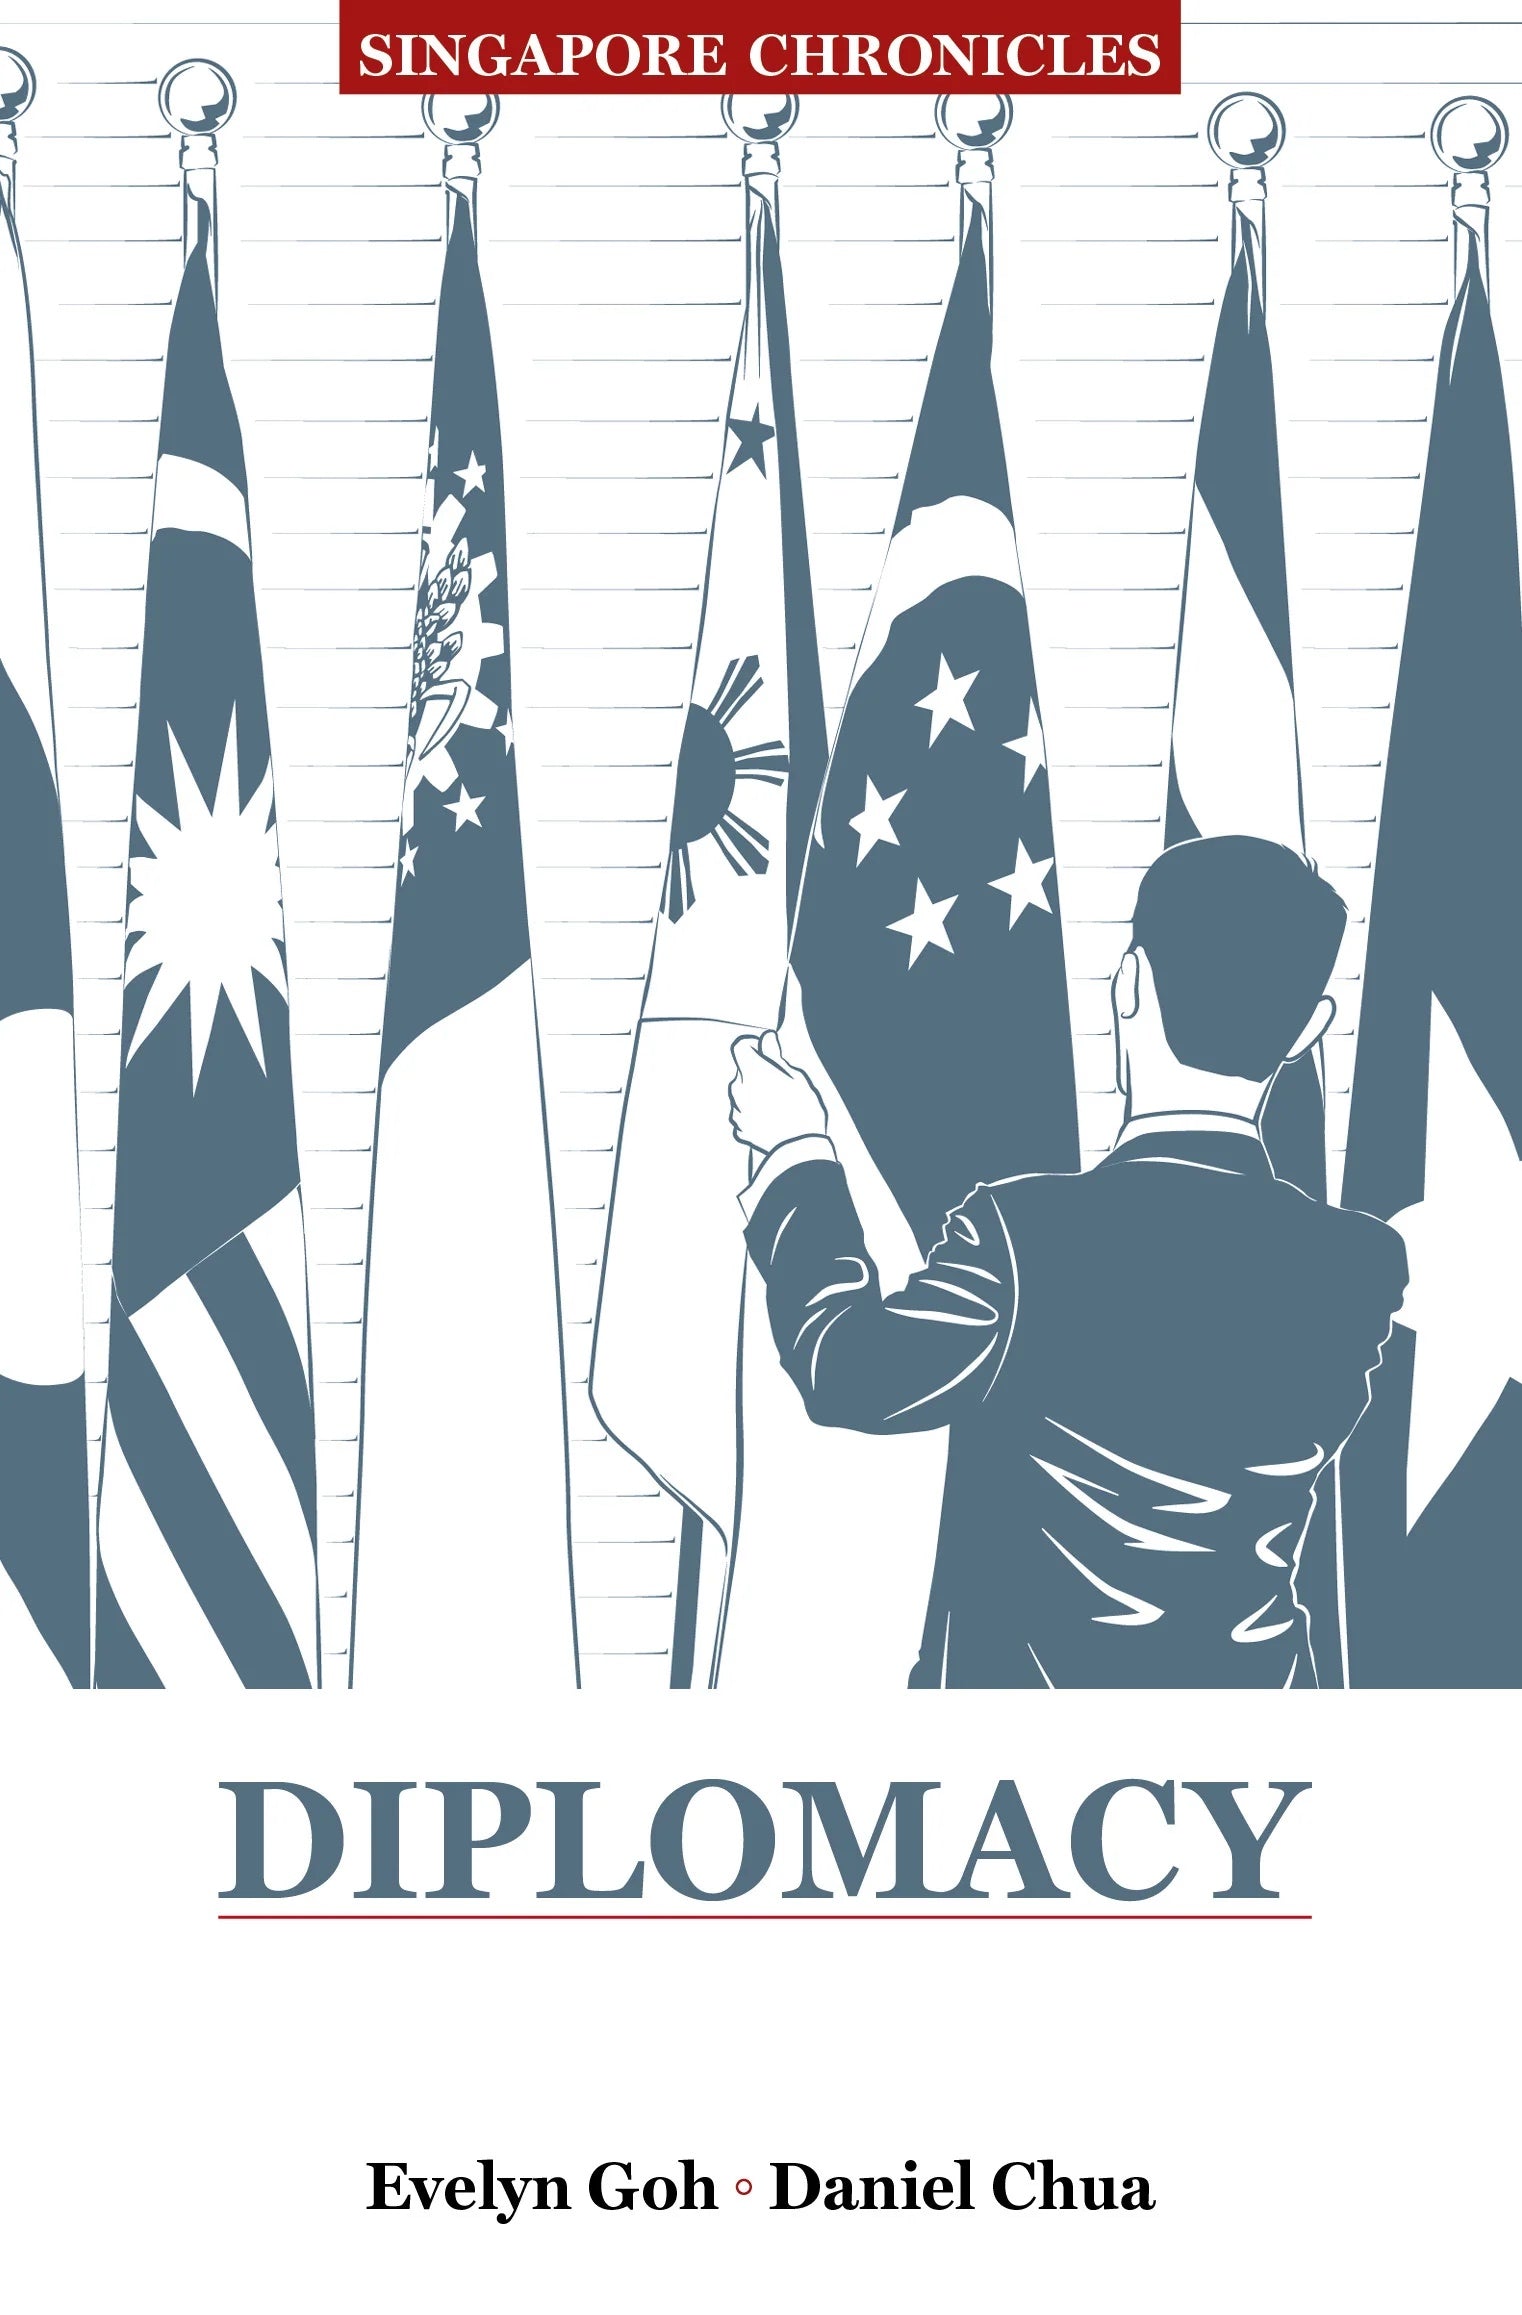 Singapore Chronicles: Diplomacy